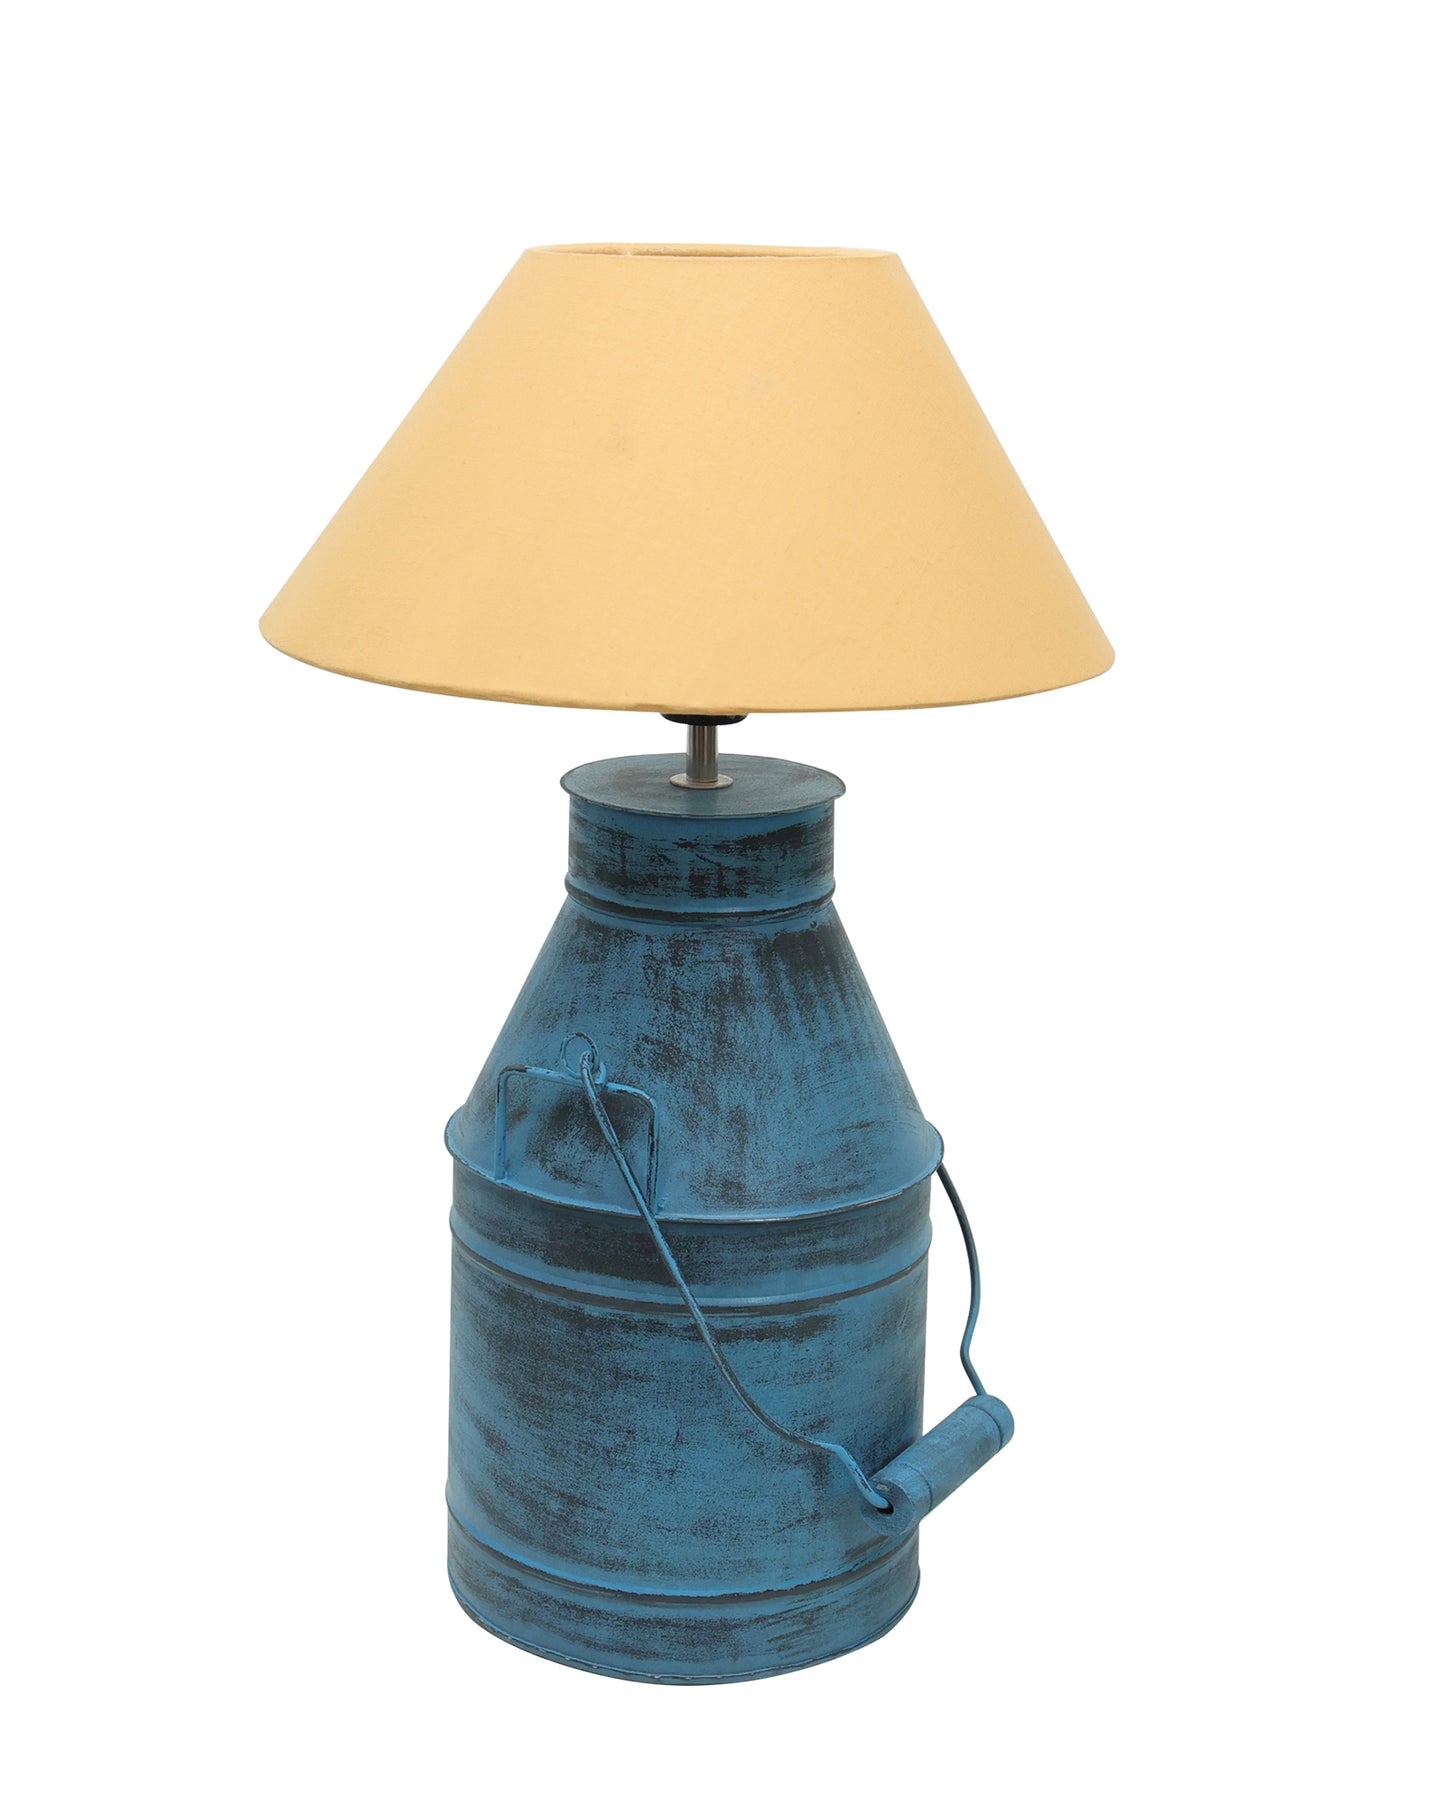 Rustic Milk Churn Can Table Lamp with cone shade, Rustic Algae